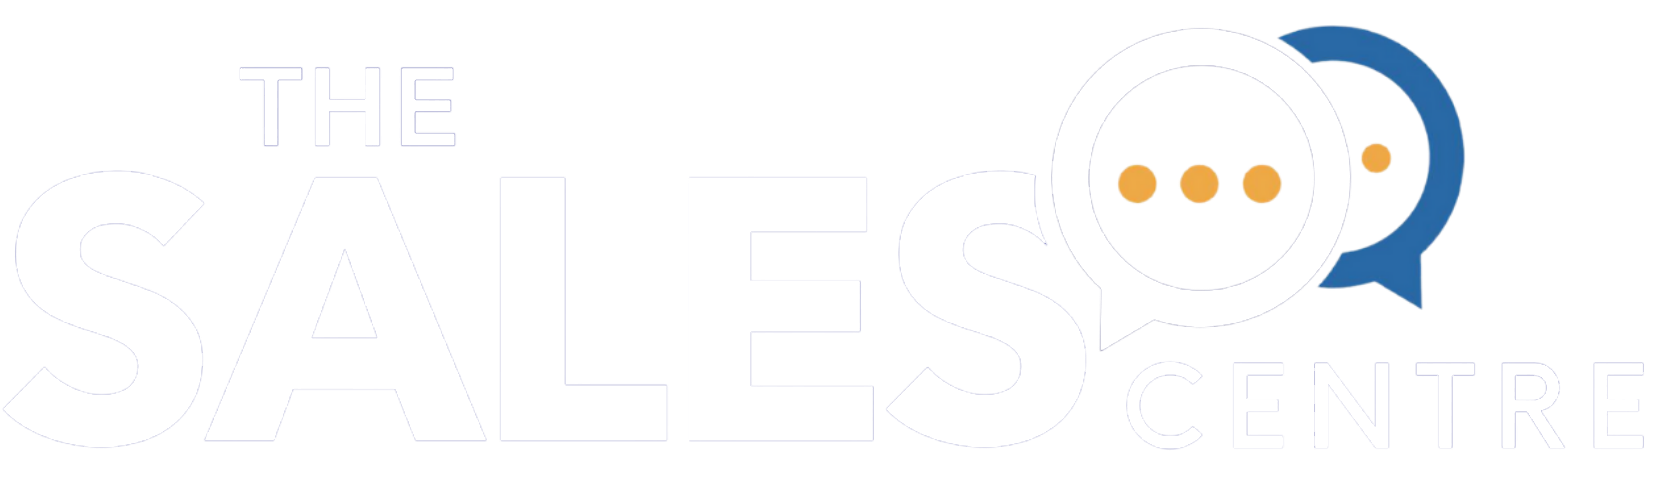 Logo-Blanco